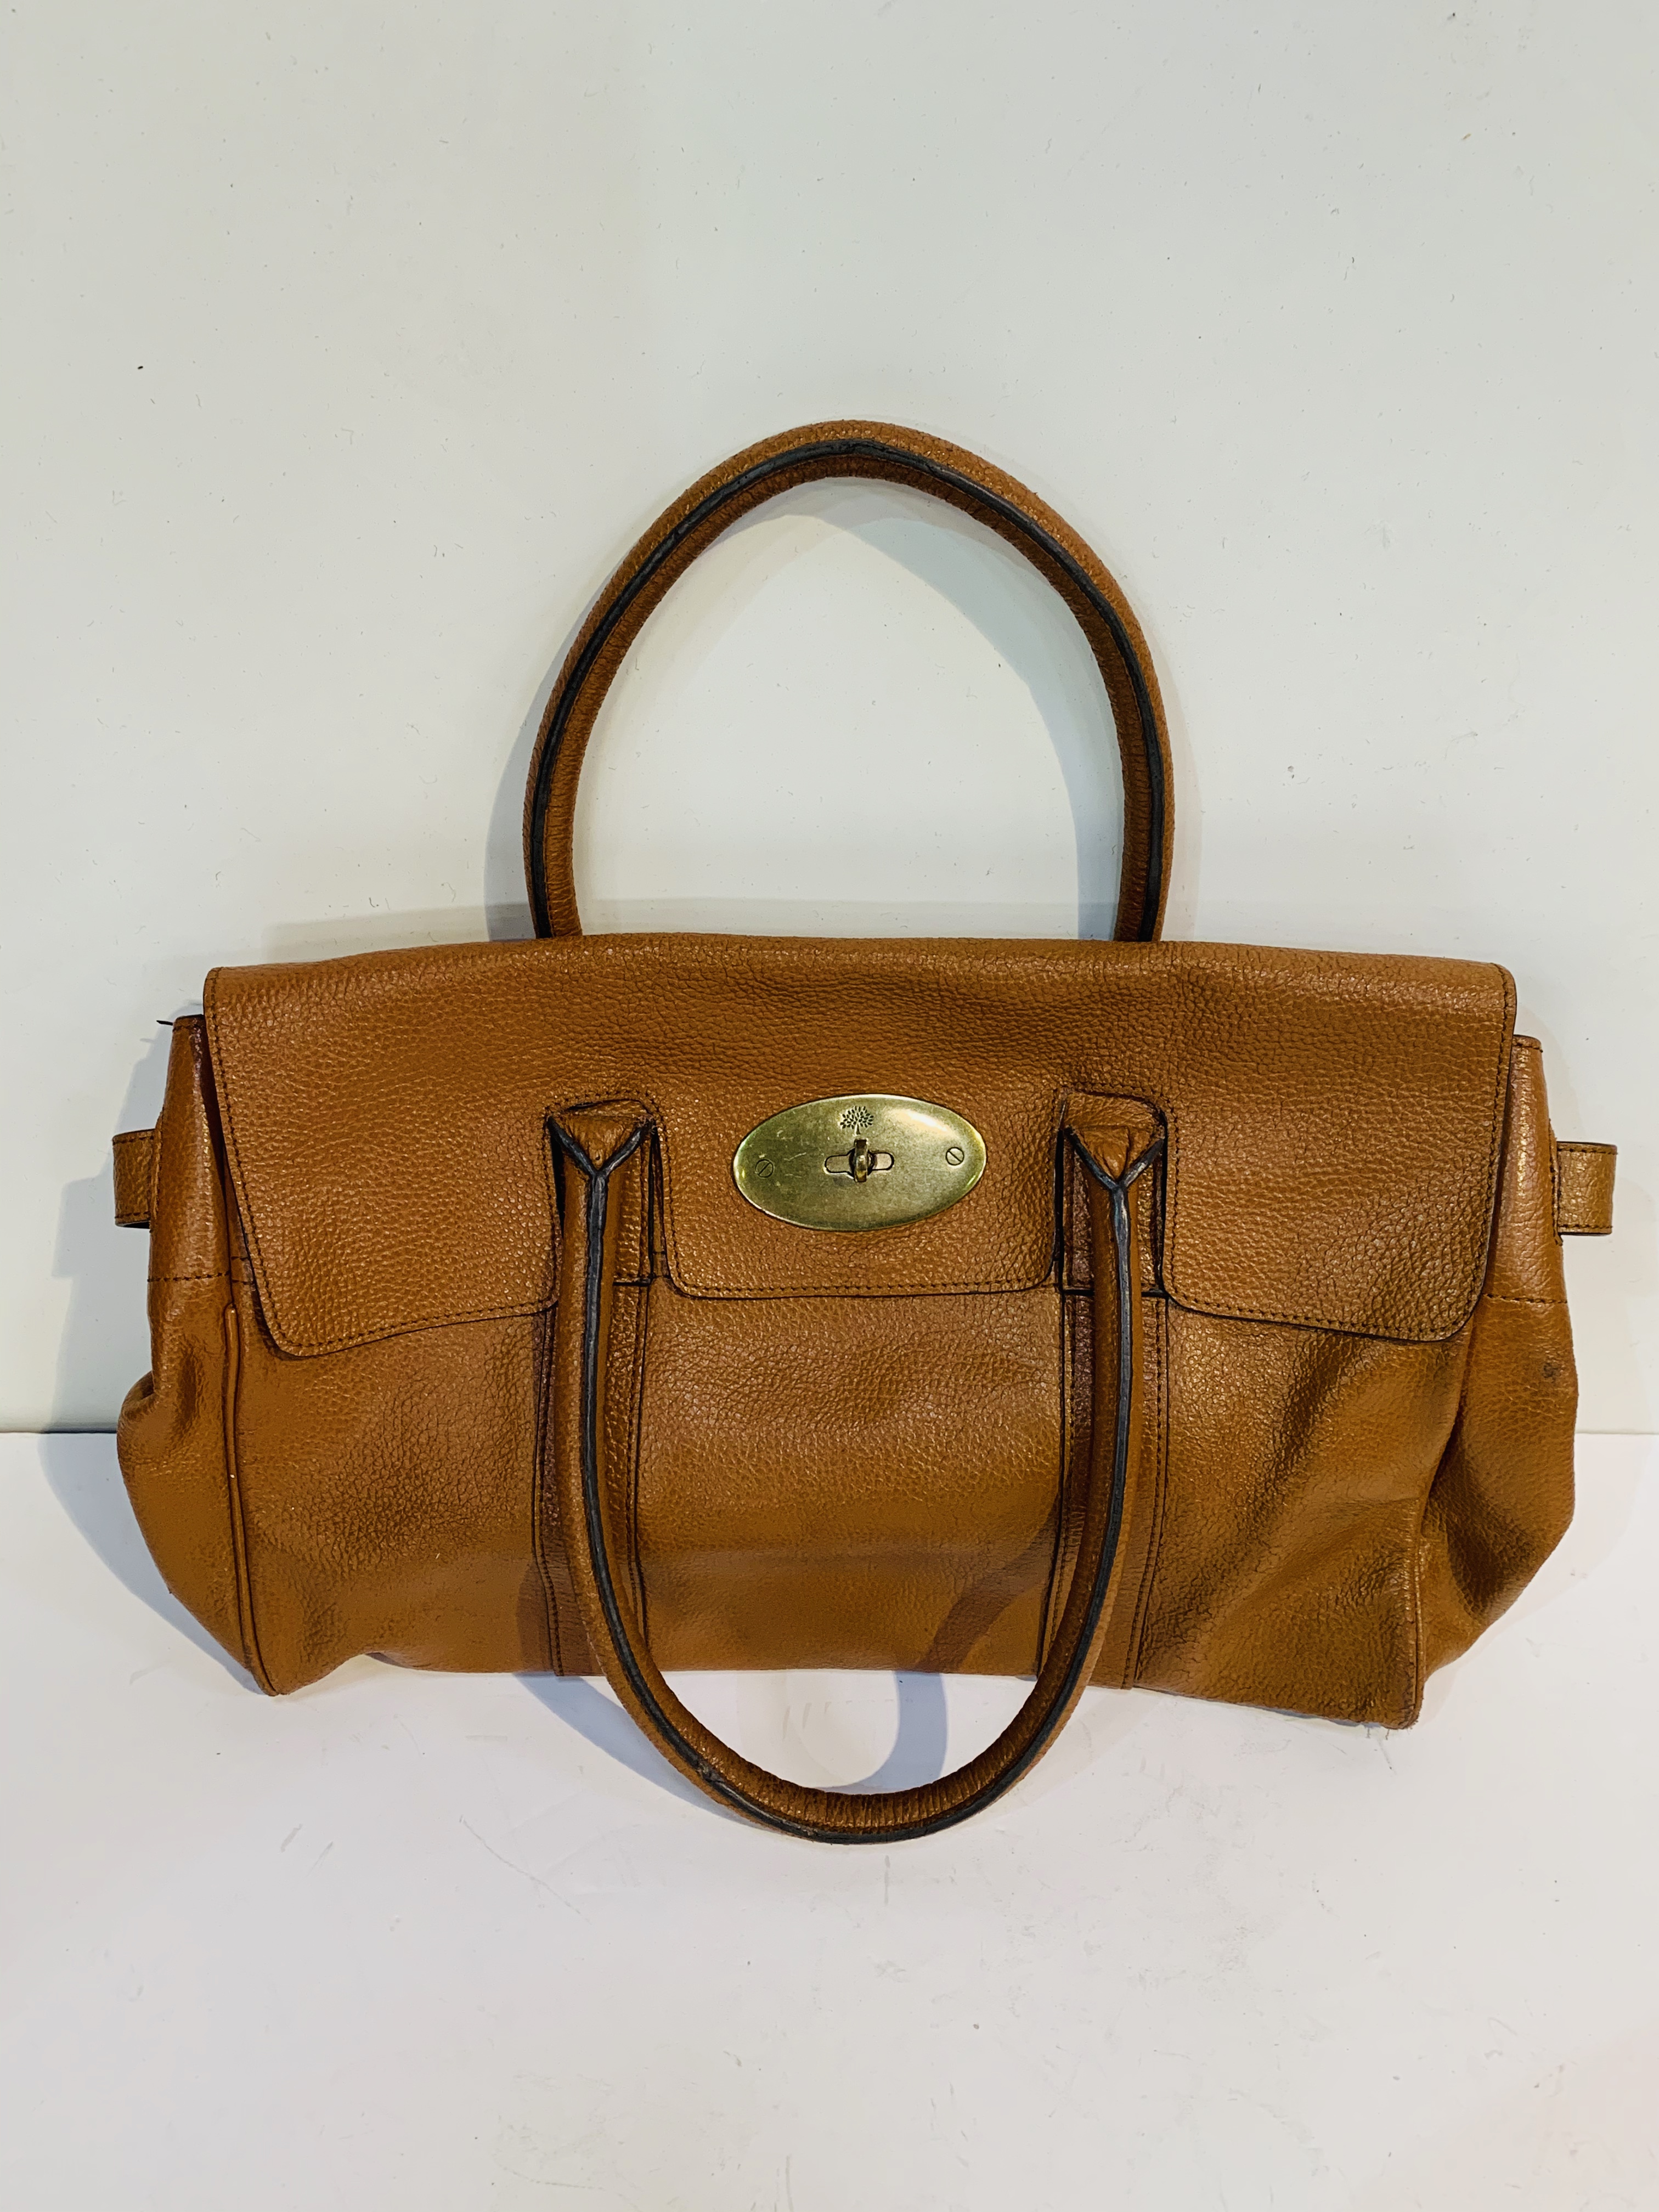 Mulberry style tan calfskin handbag, with code 373140.